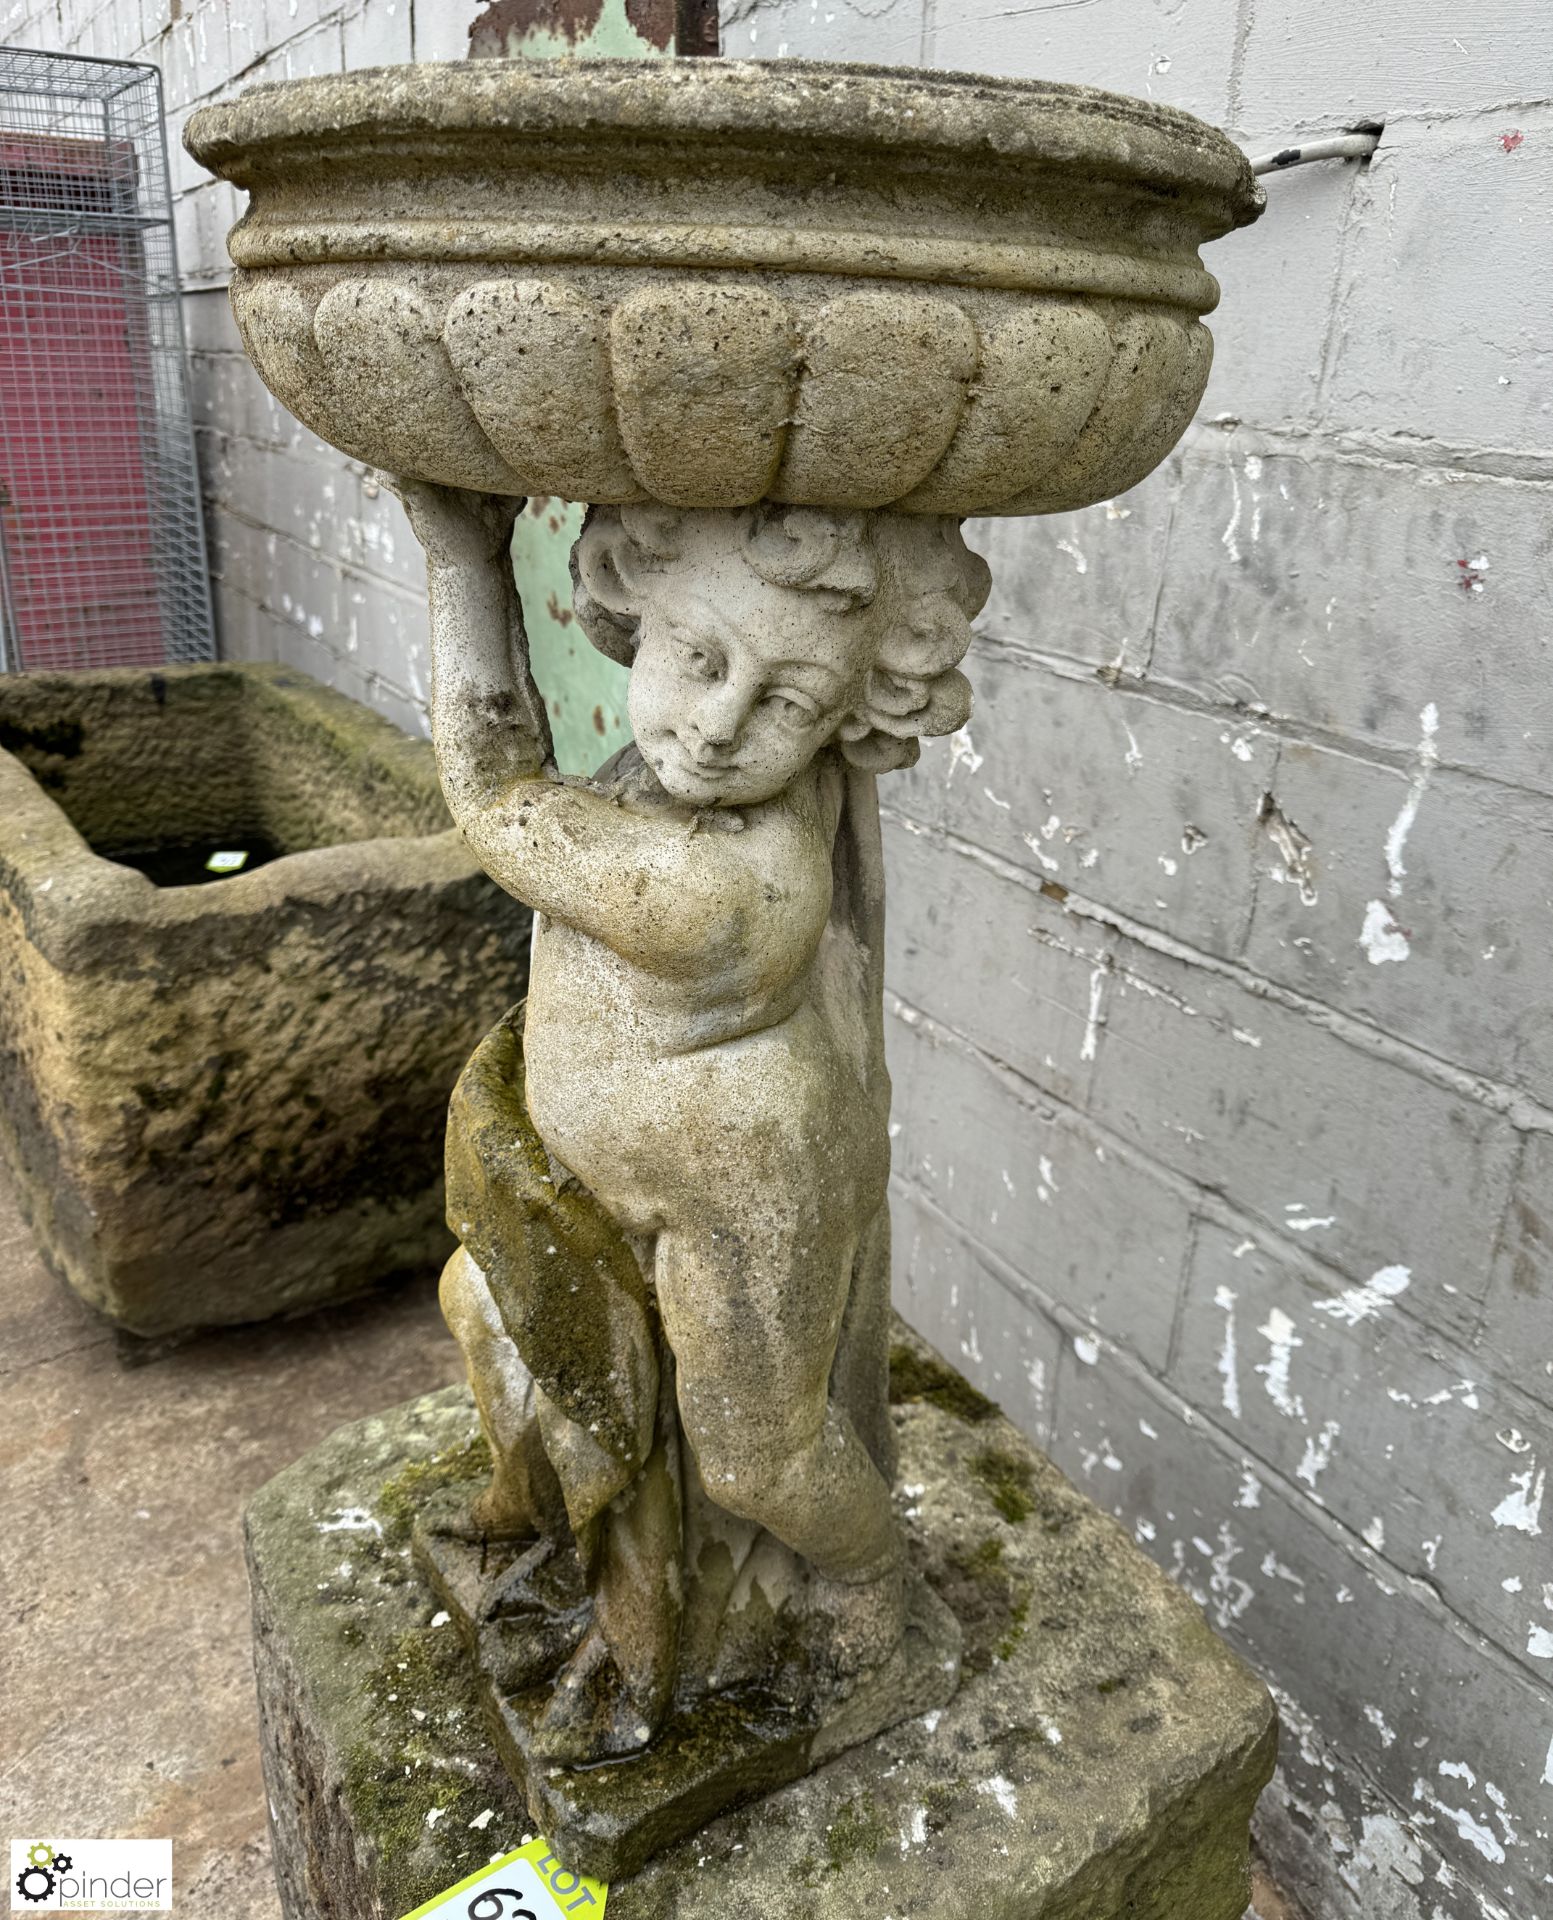 Reconstituted stone Birdbath, with cherub holding birdbath, 900mm high